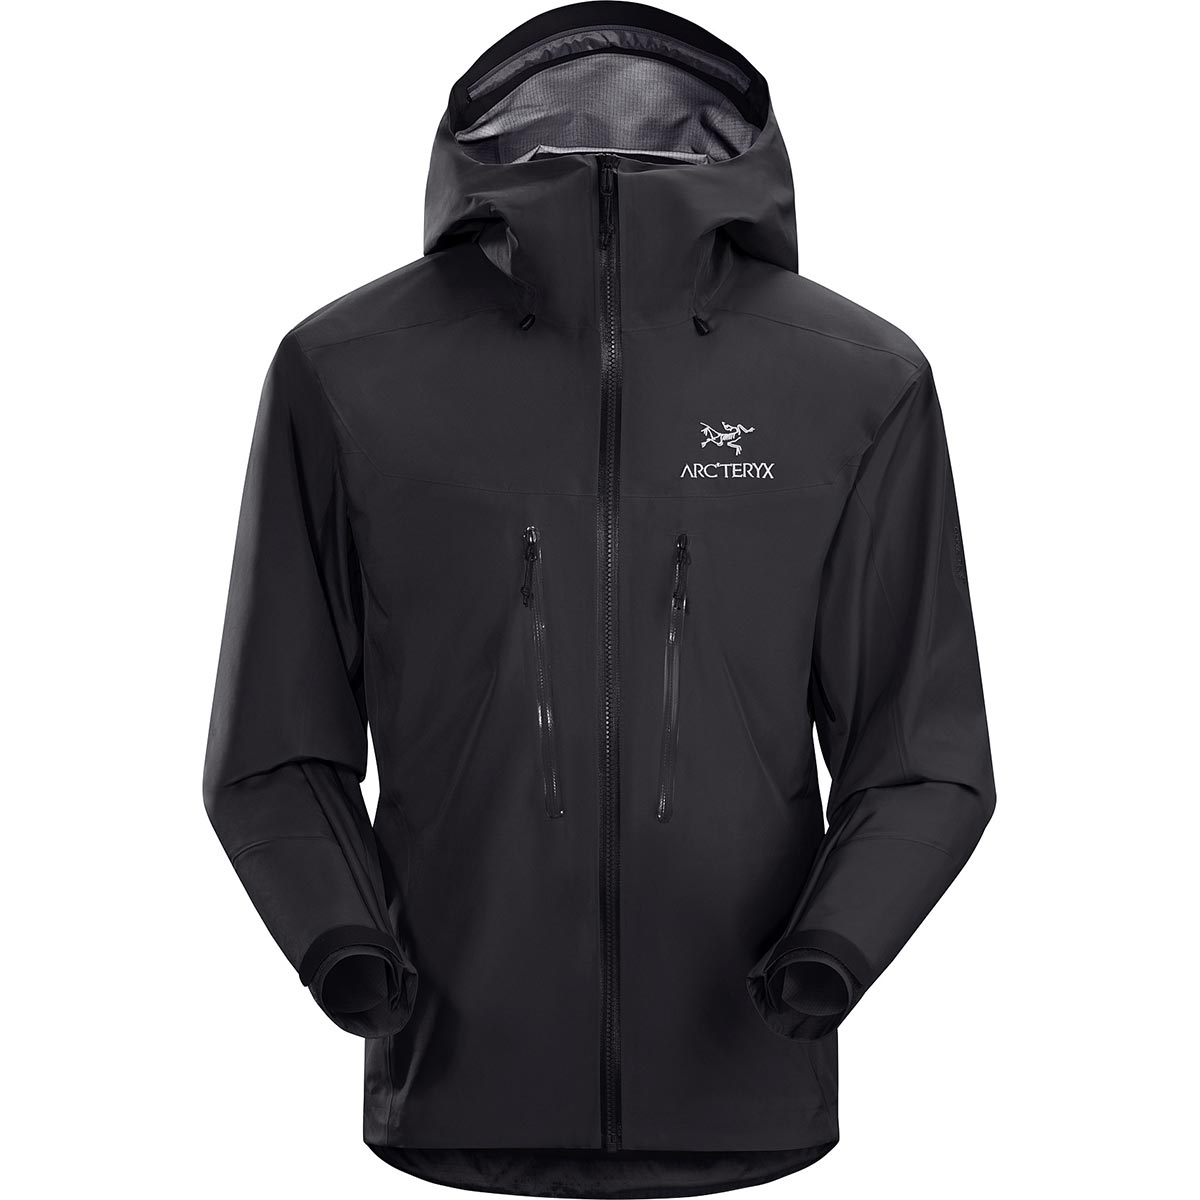 Arc'teryx Alpha AR Jacket, men's, discontinued Spring 2018 colors (free ...